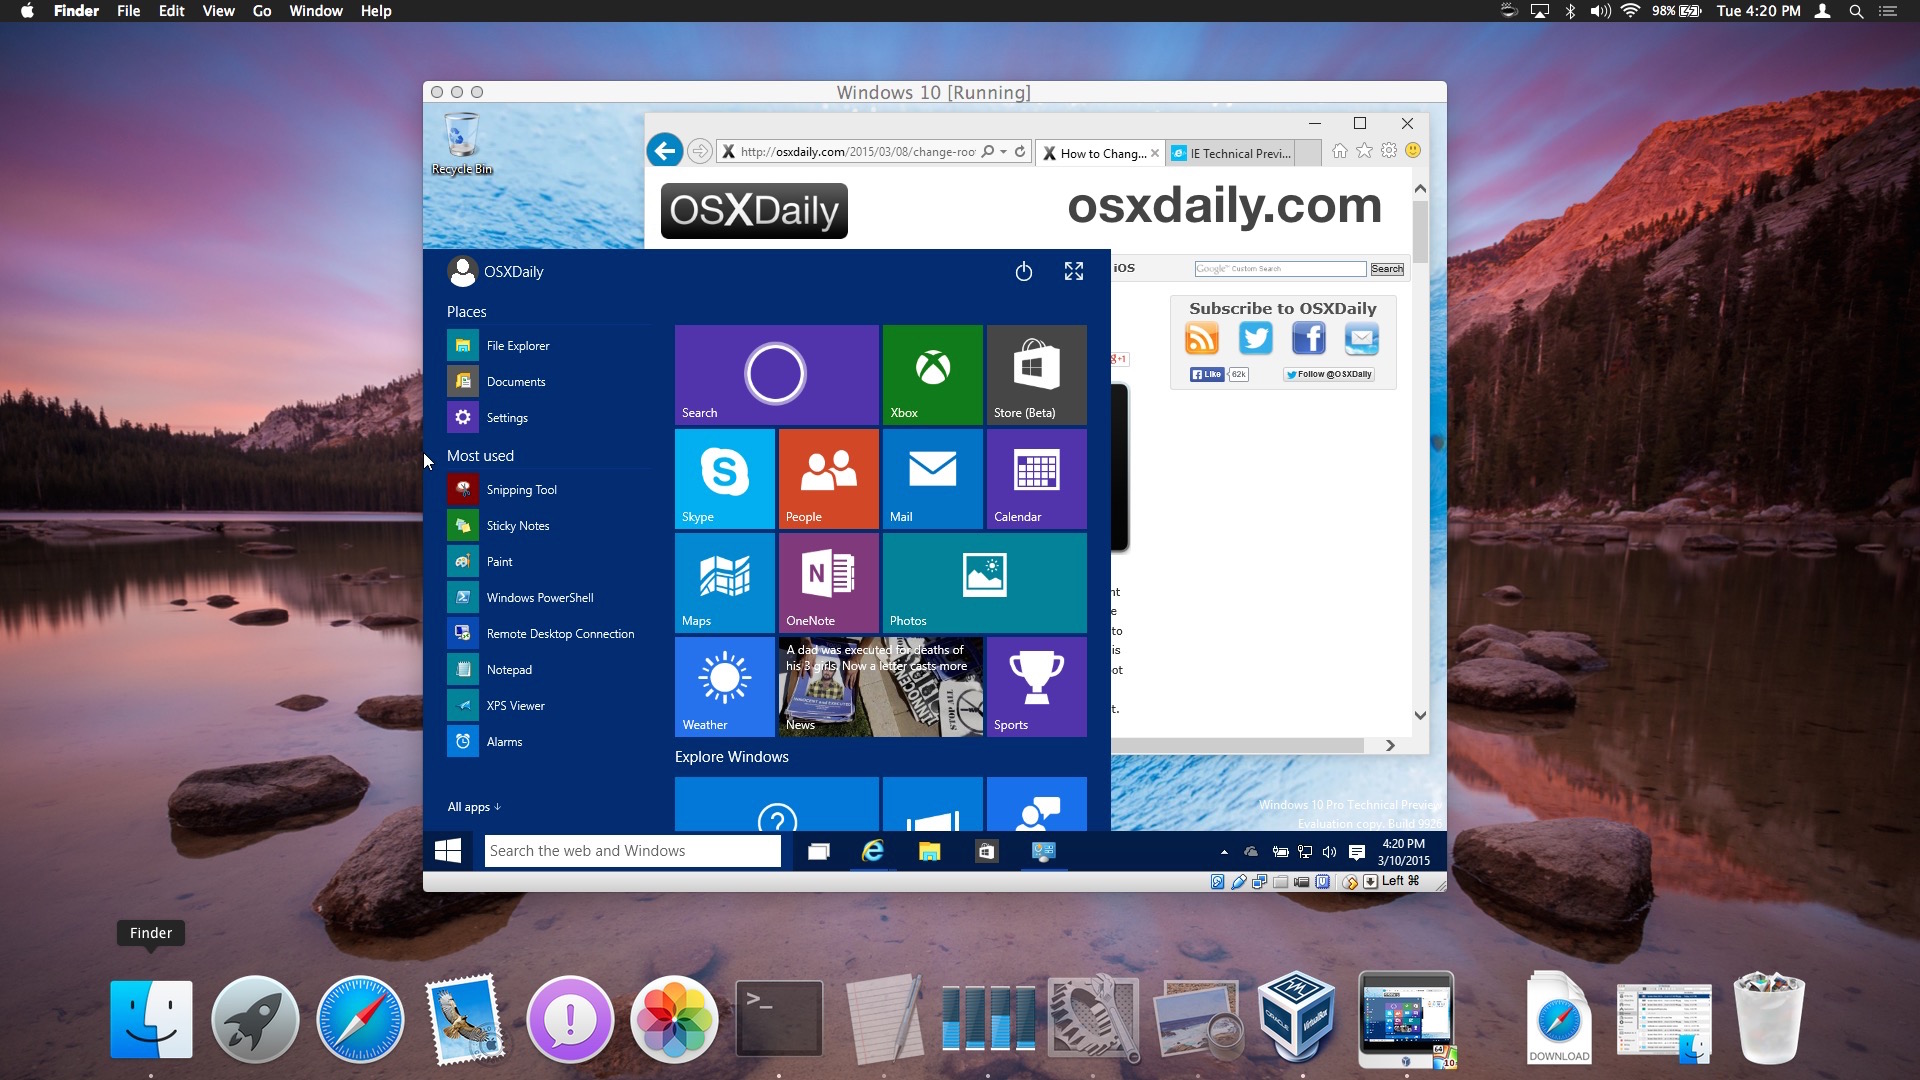 Windows 10 running on Mac OS X